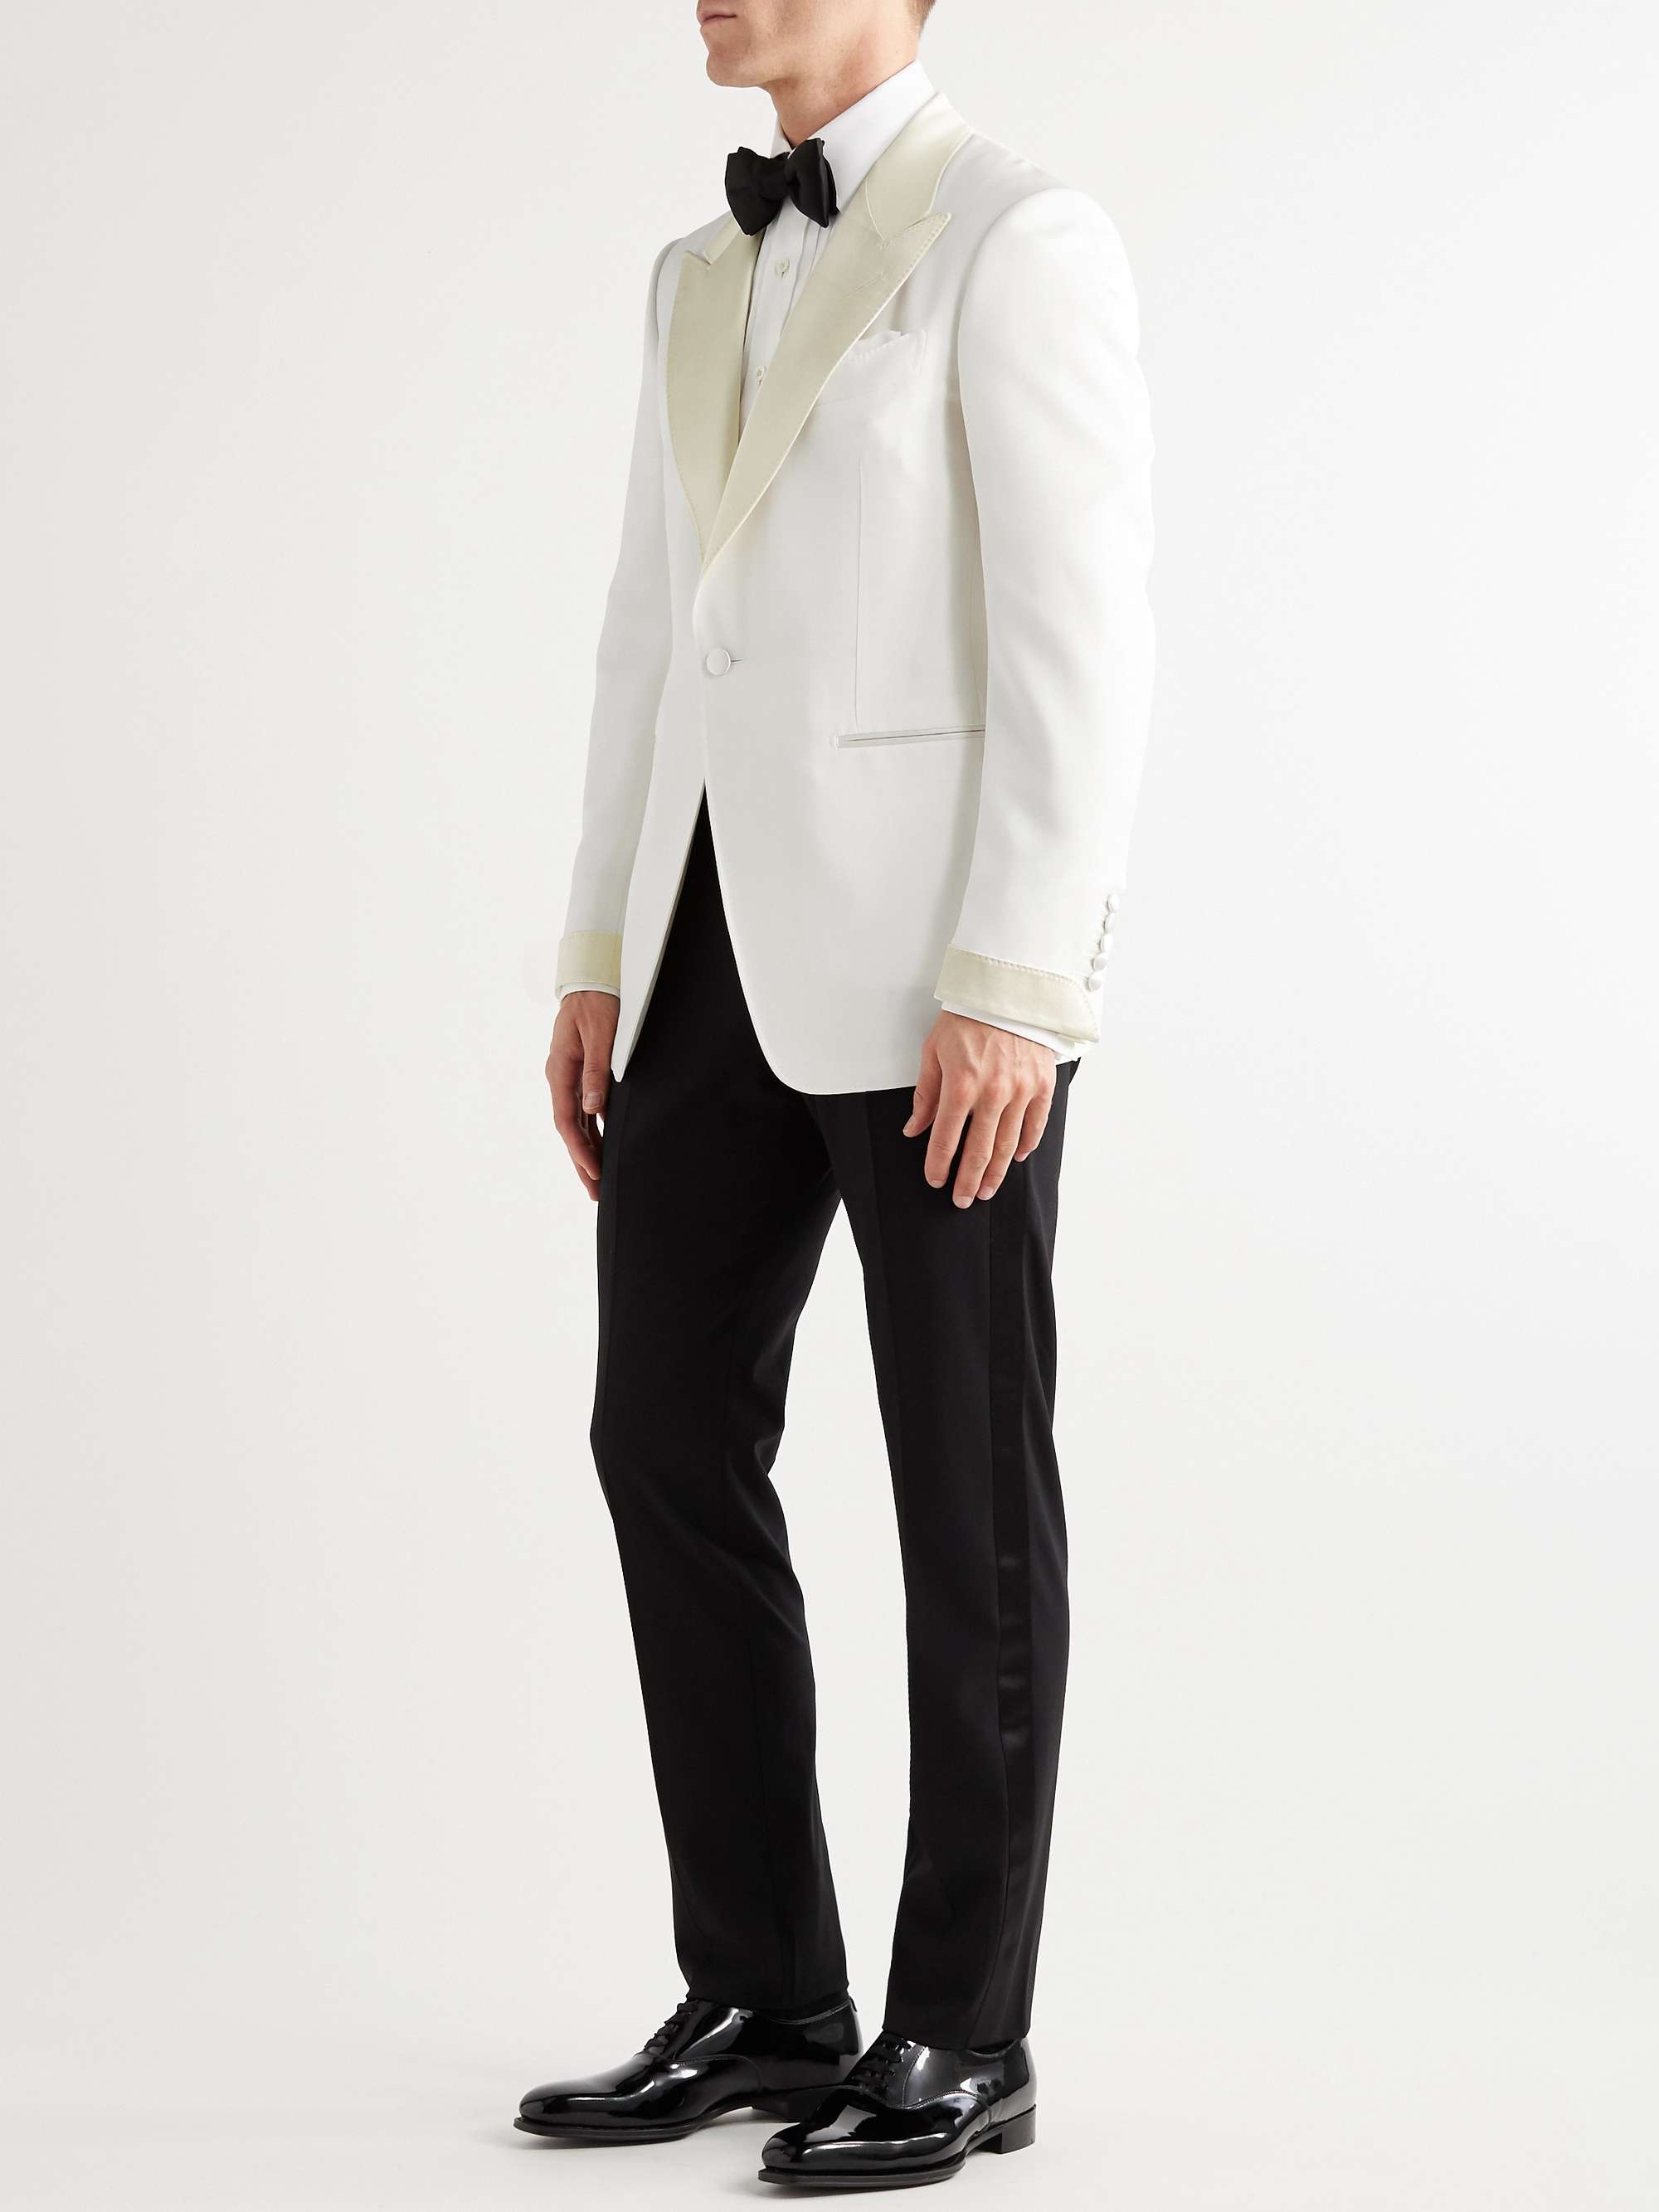 TOM FORD Slim-Fit Satin-Trimmed Wool and Mohair-Blend Tuxedo Jacket for Men  | MR PORTER